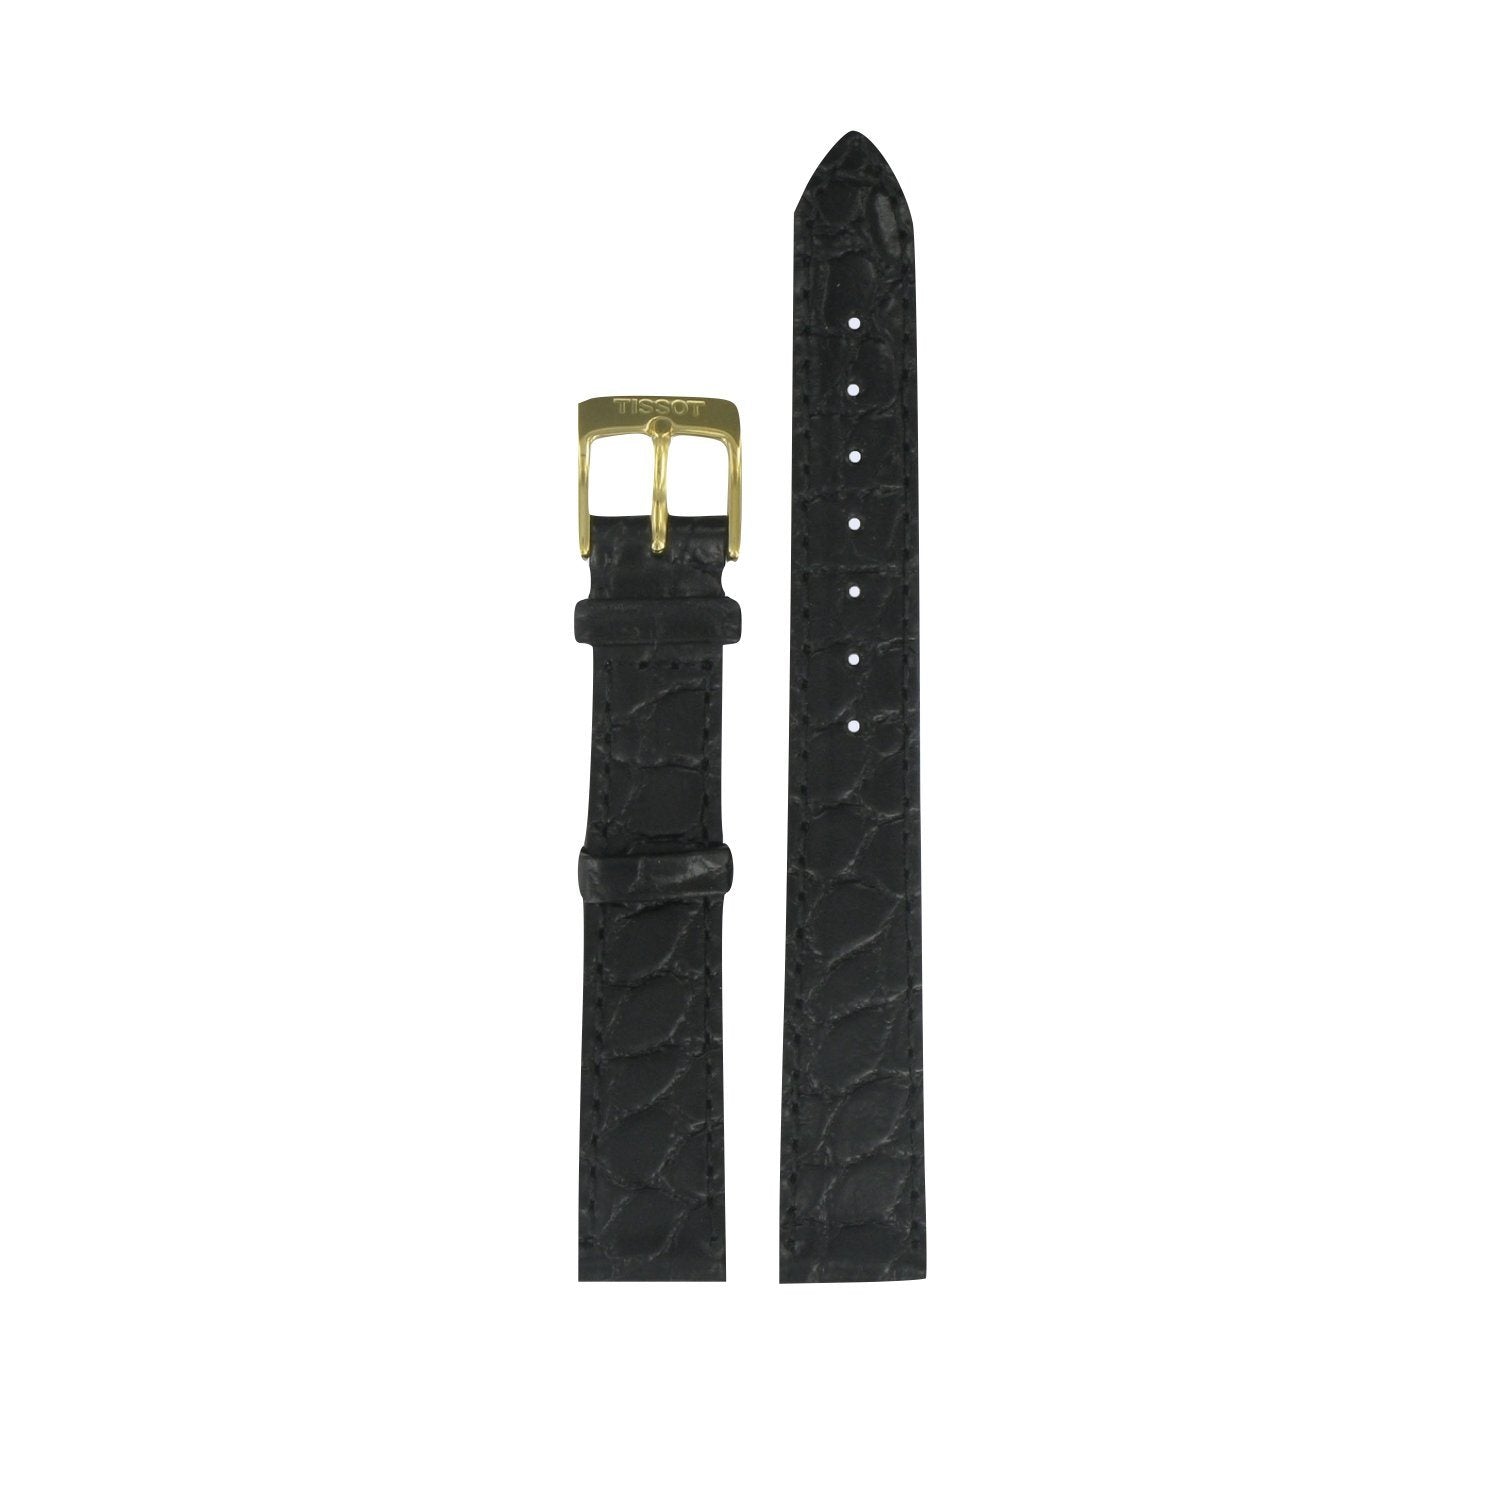 Genuine Tissot 14mm Carmel Black Leather Strap by Tissot